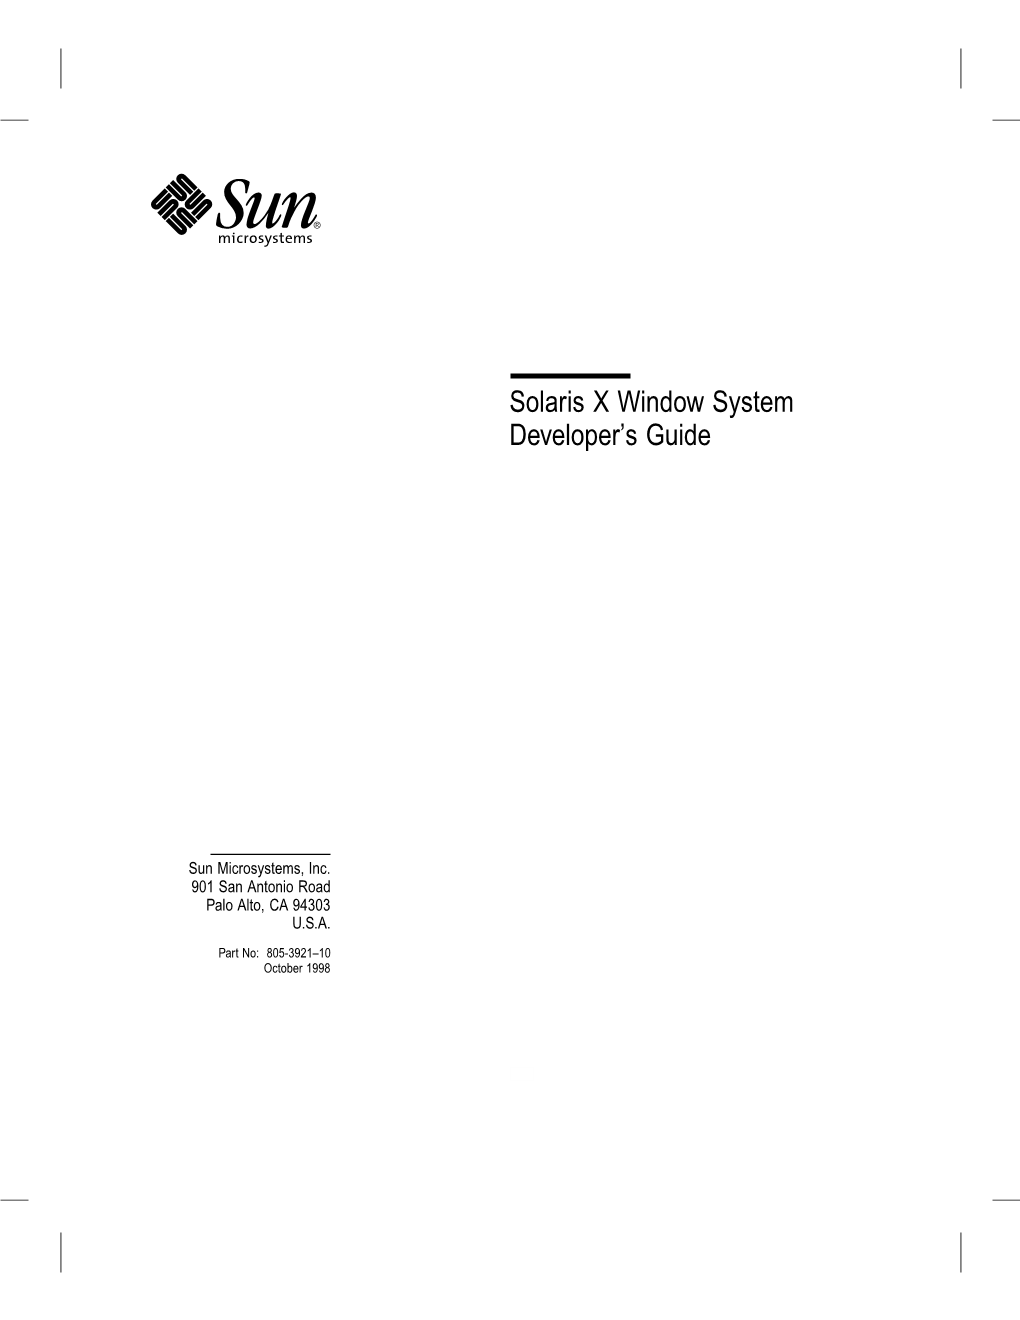 Solaris X Window System Developer's Guide